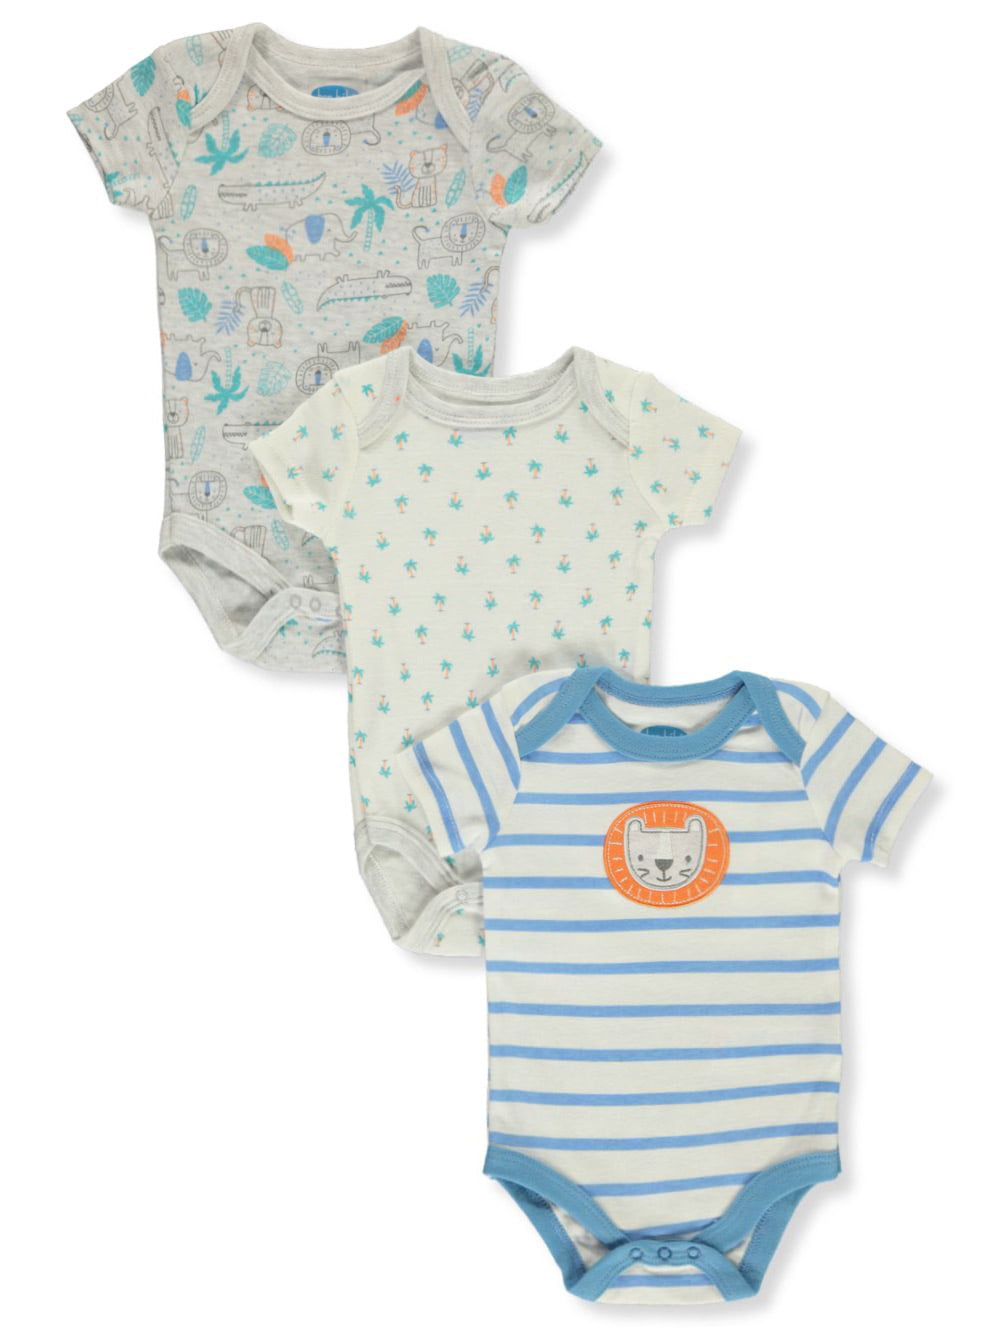 Bon Bebe Baby Boys' 3-Pack Bodysuits - blue/multi, 6 - 9 months (Newborn) -  Walmart.com